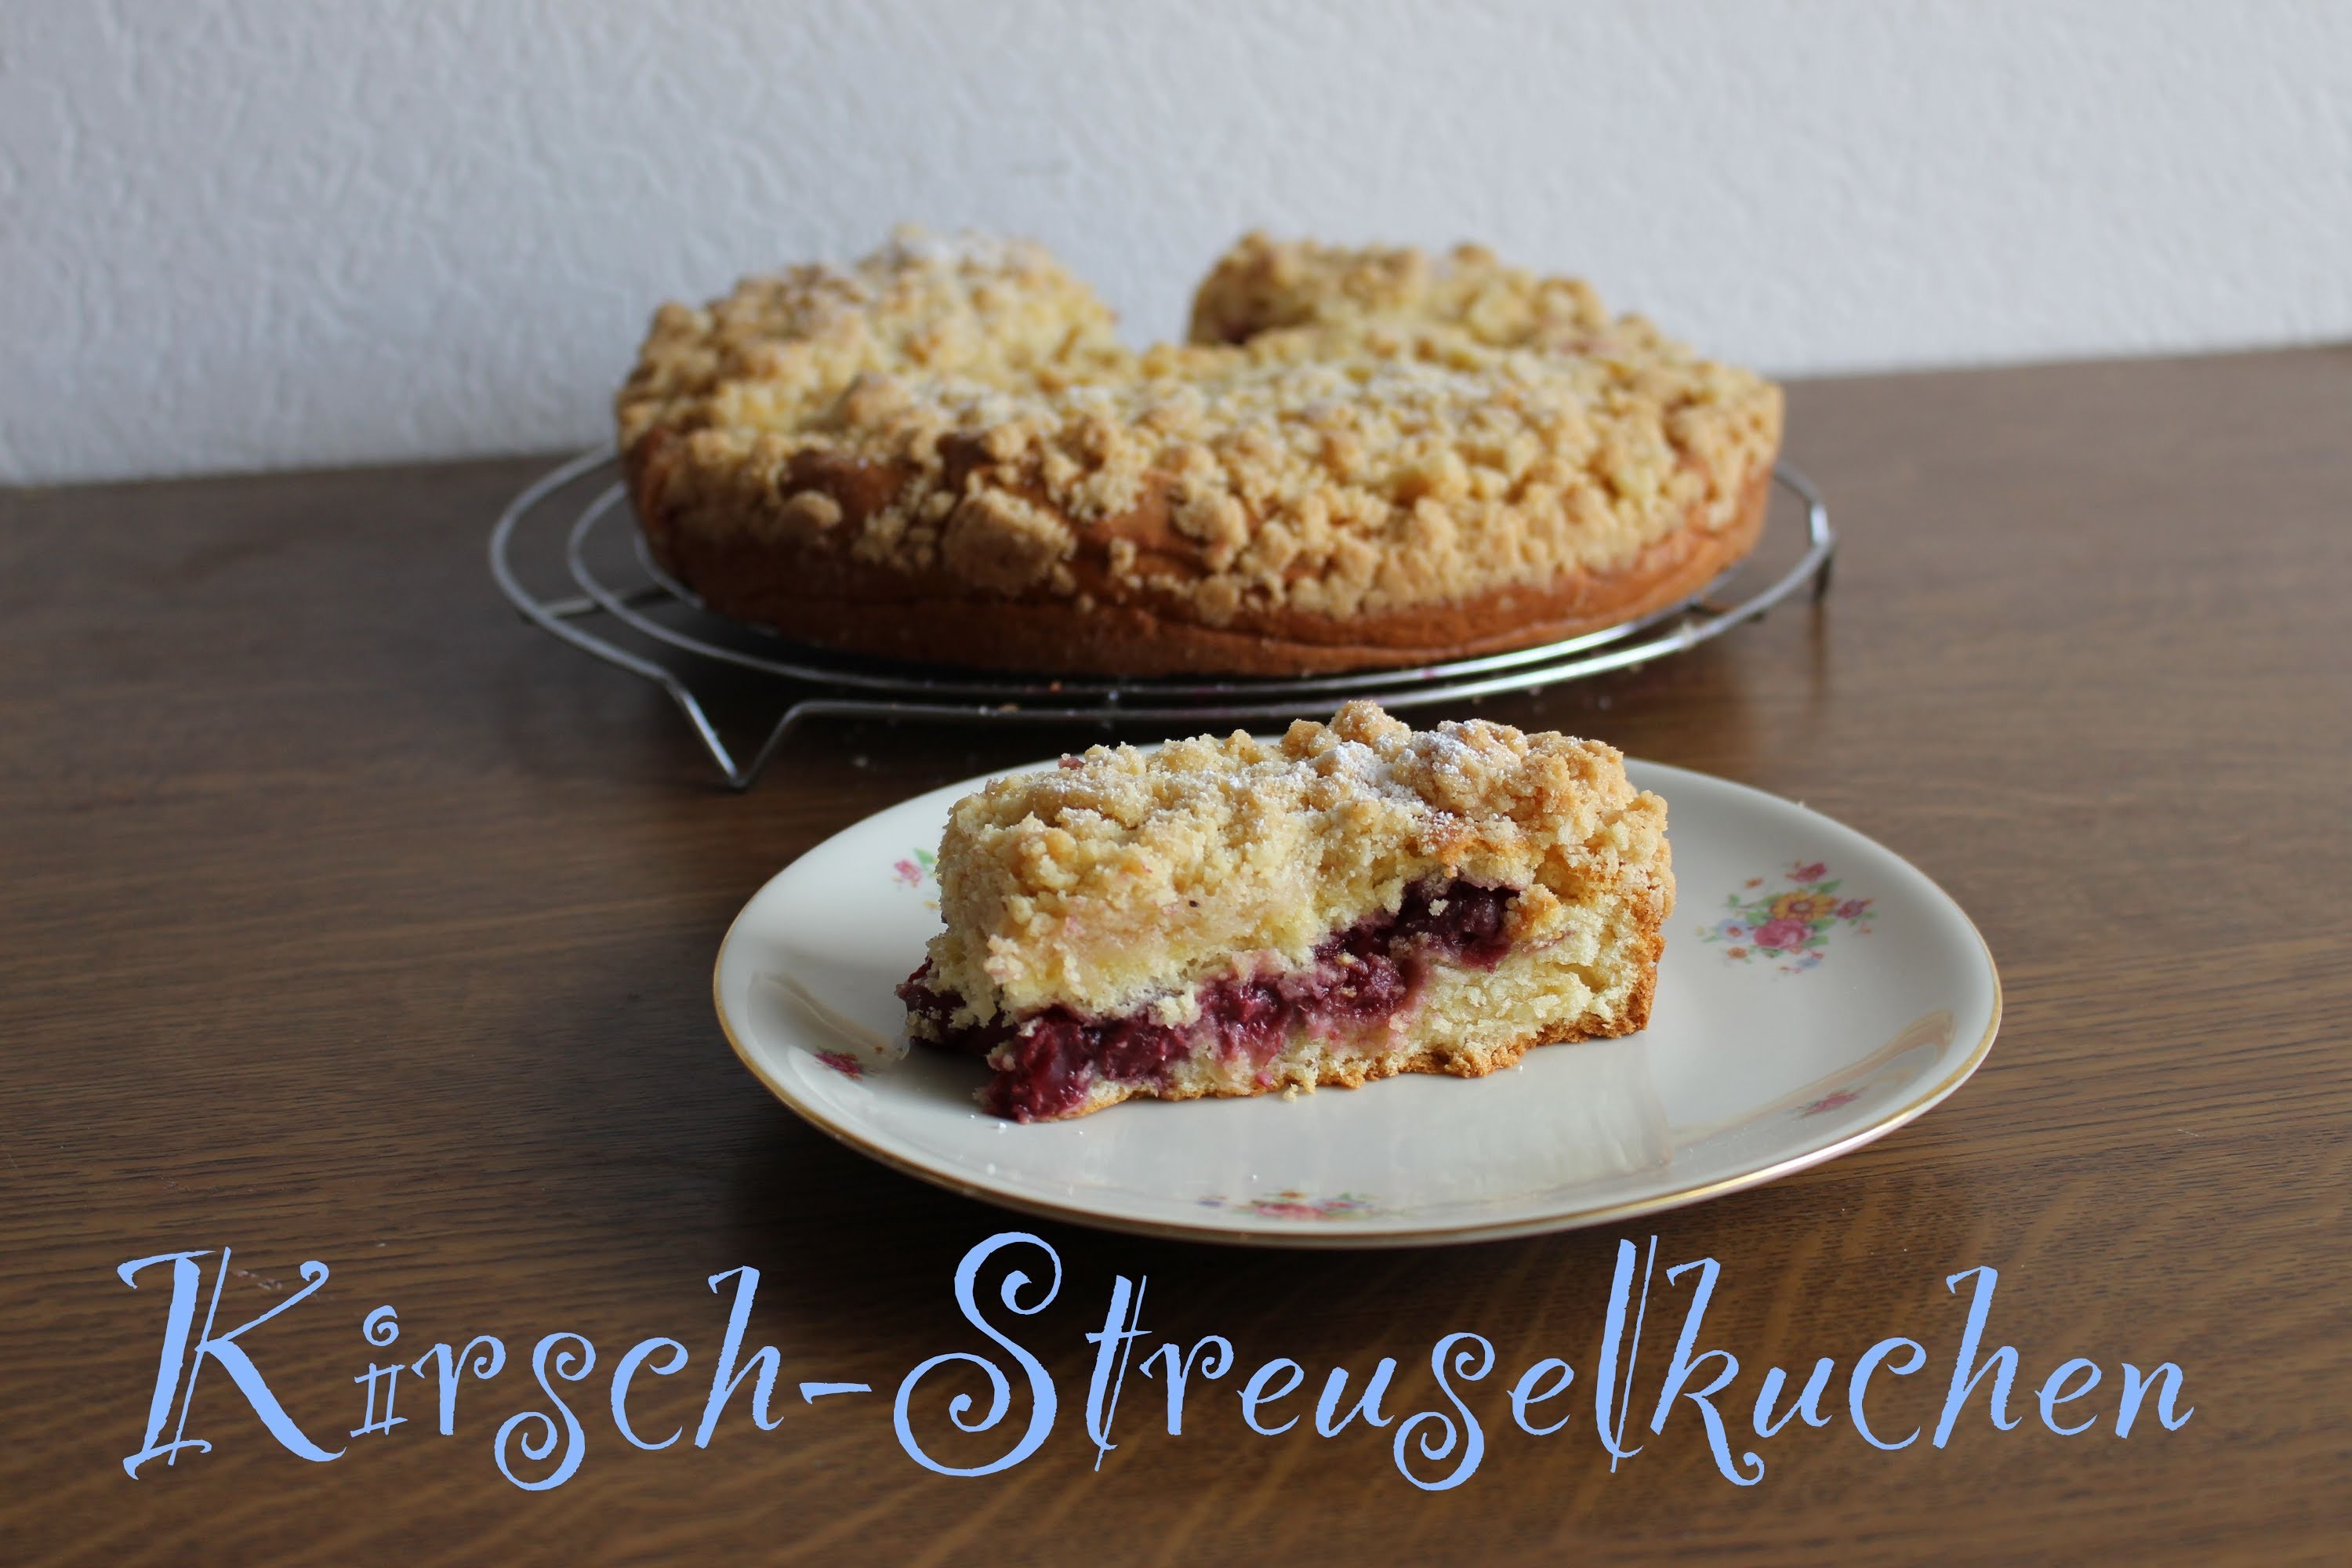 Kirsch-Streuselkuchen (pastel alemán de cerezas agrias)